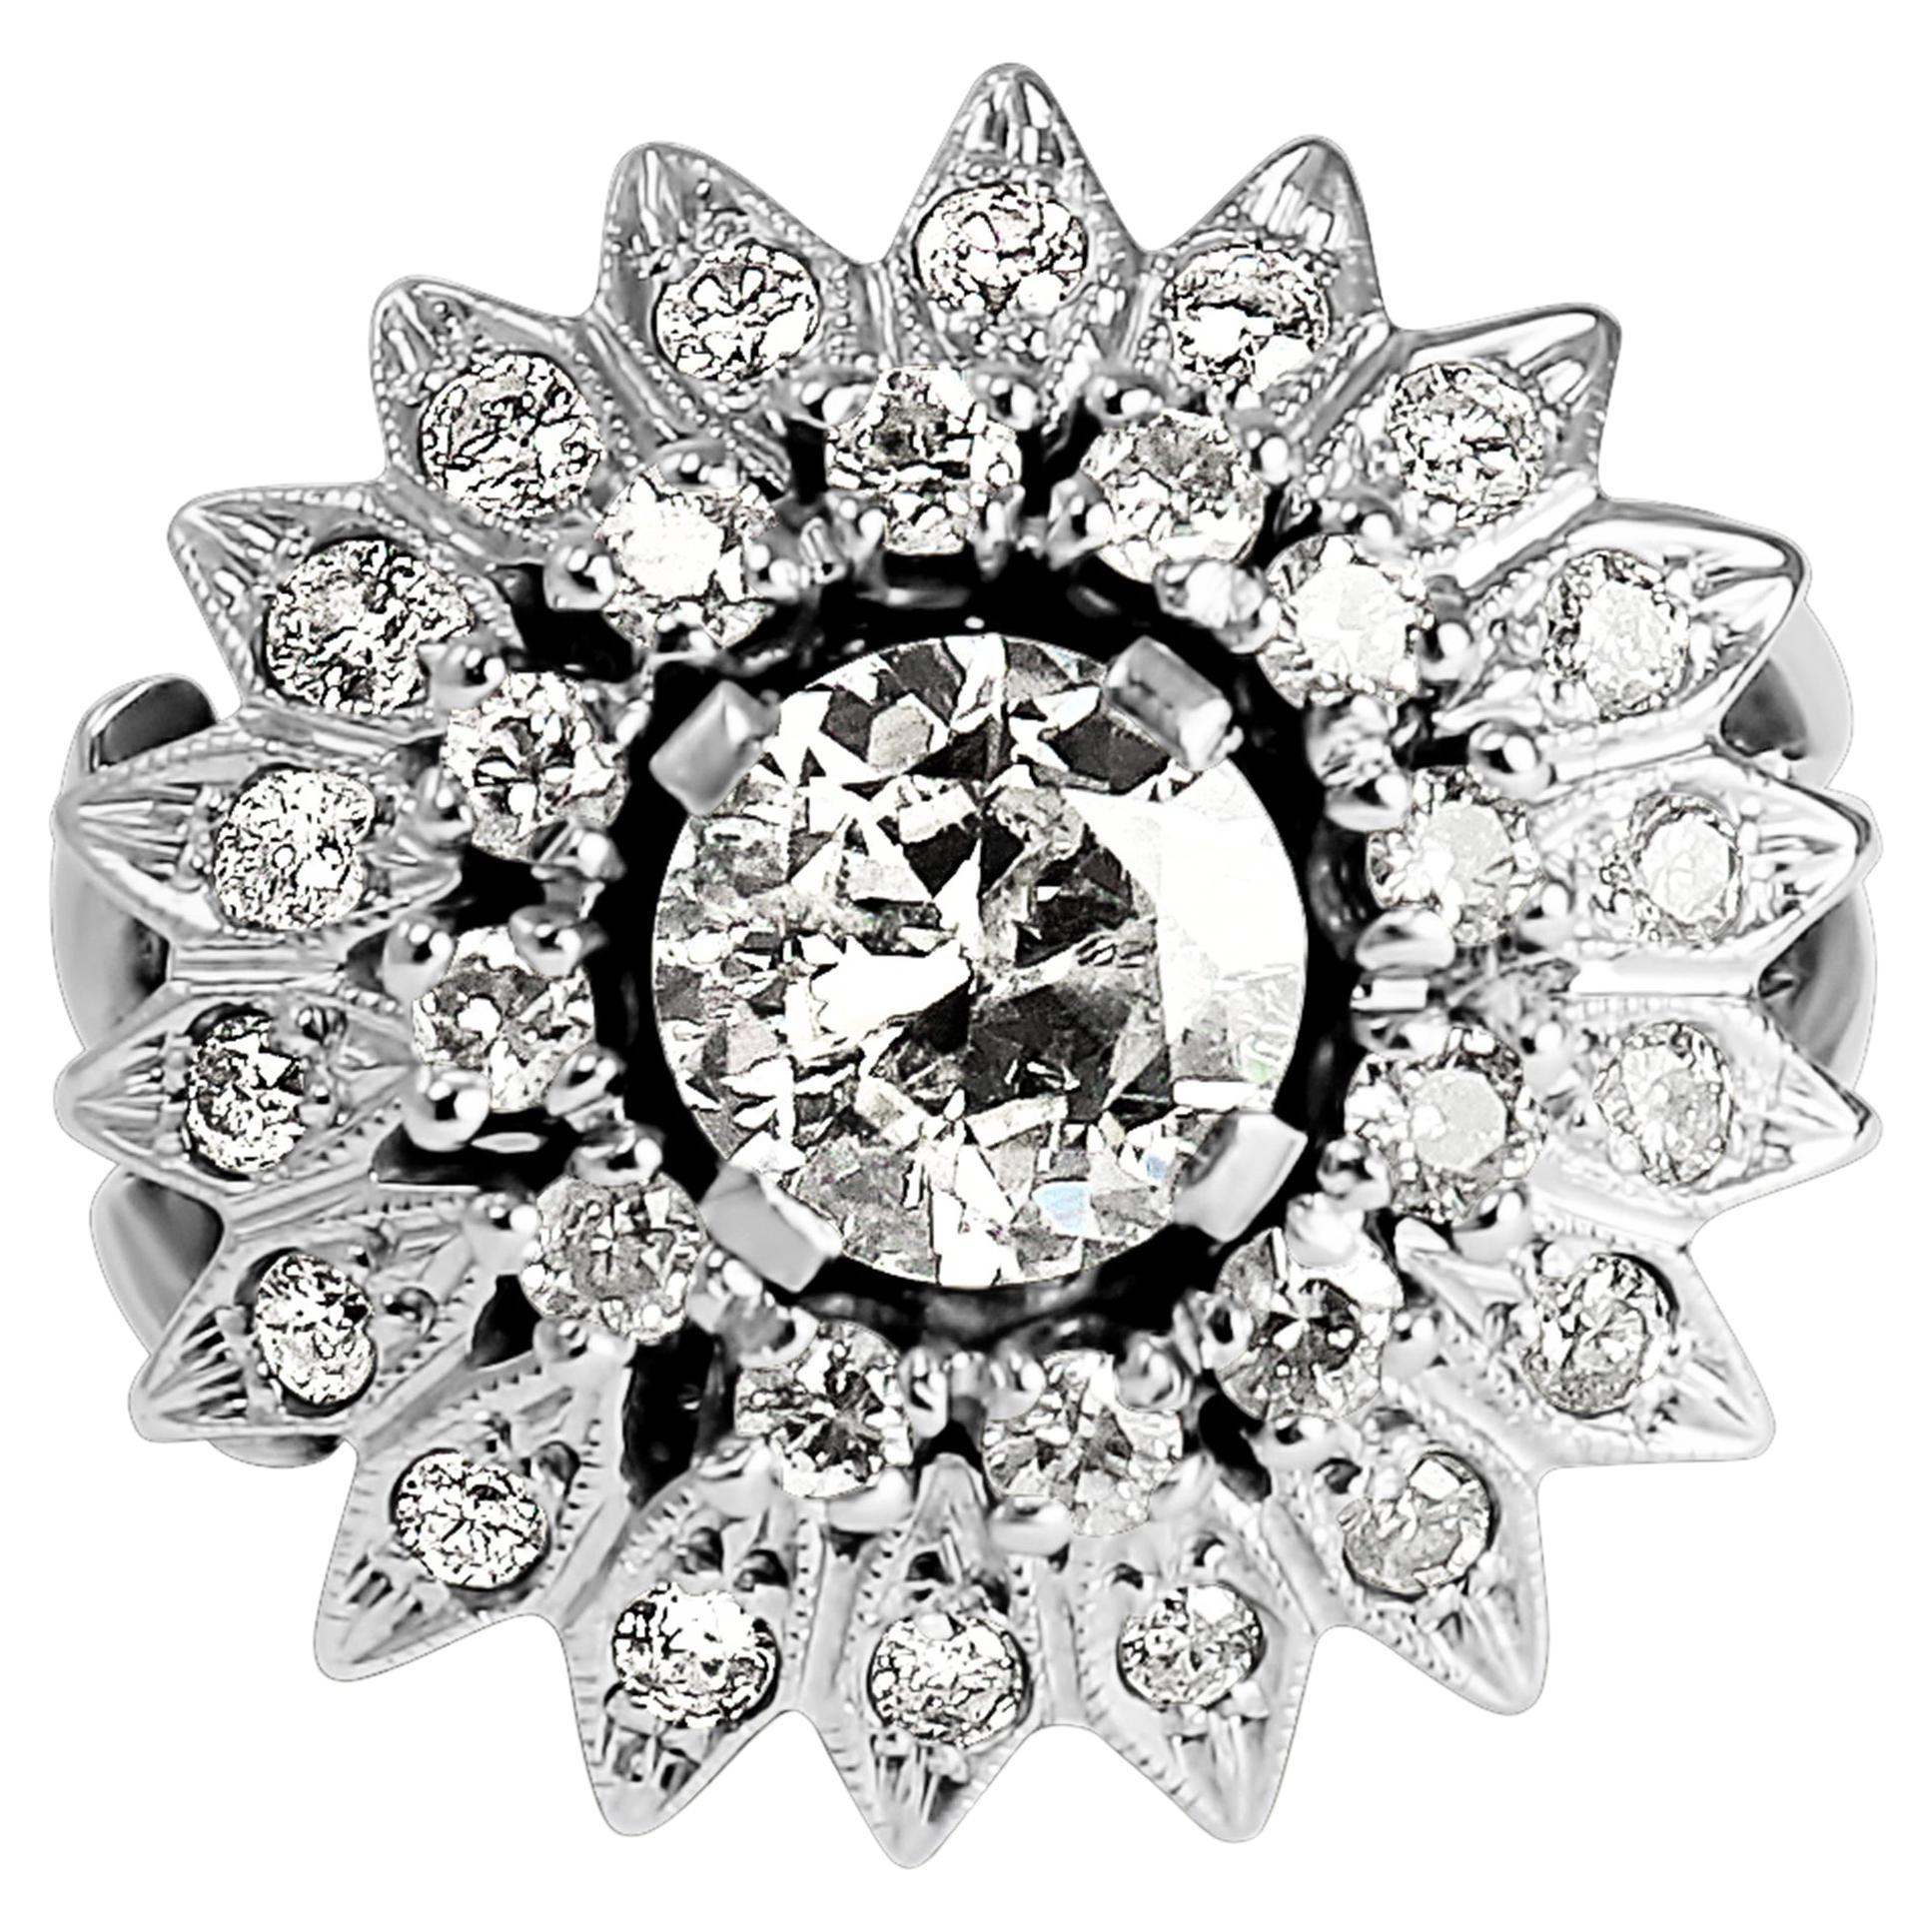 Vintage Starburst Cocktail Ring with 1.50 carat Round Diamond in Platinum For Sale